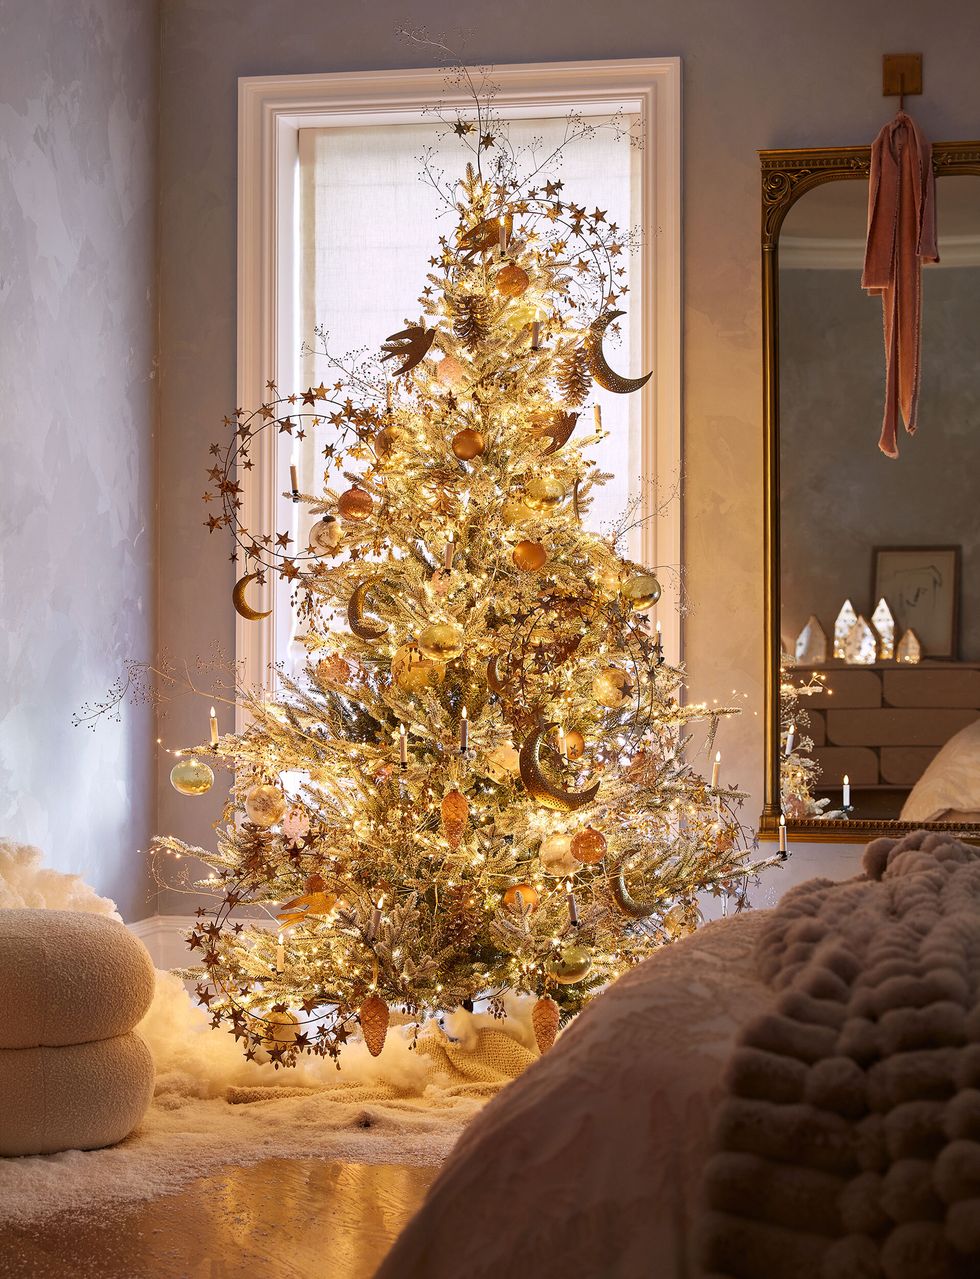 Ornament Trees - Spiral Wire Ornament Tree - 3 Foot, Ornament Display Trees